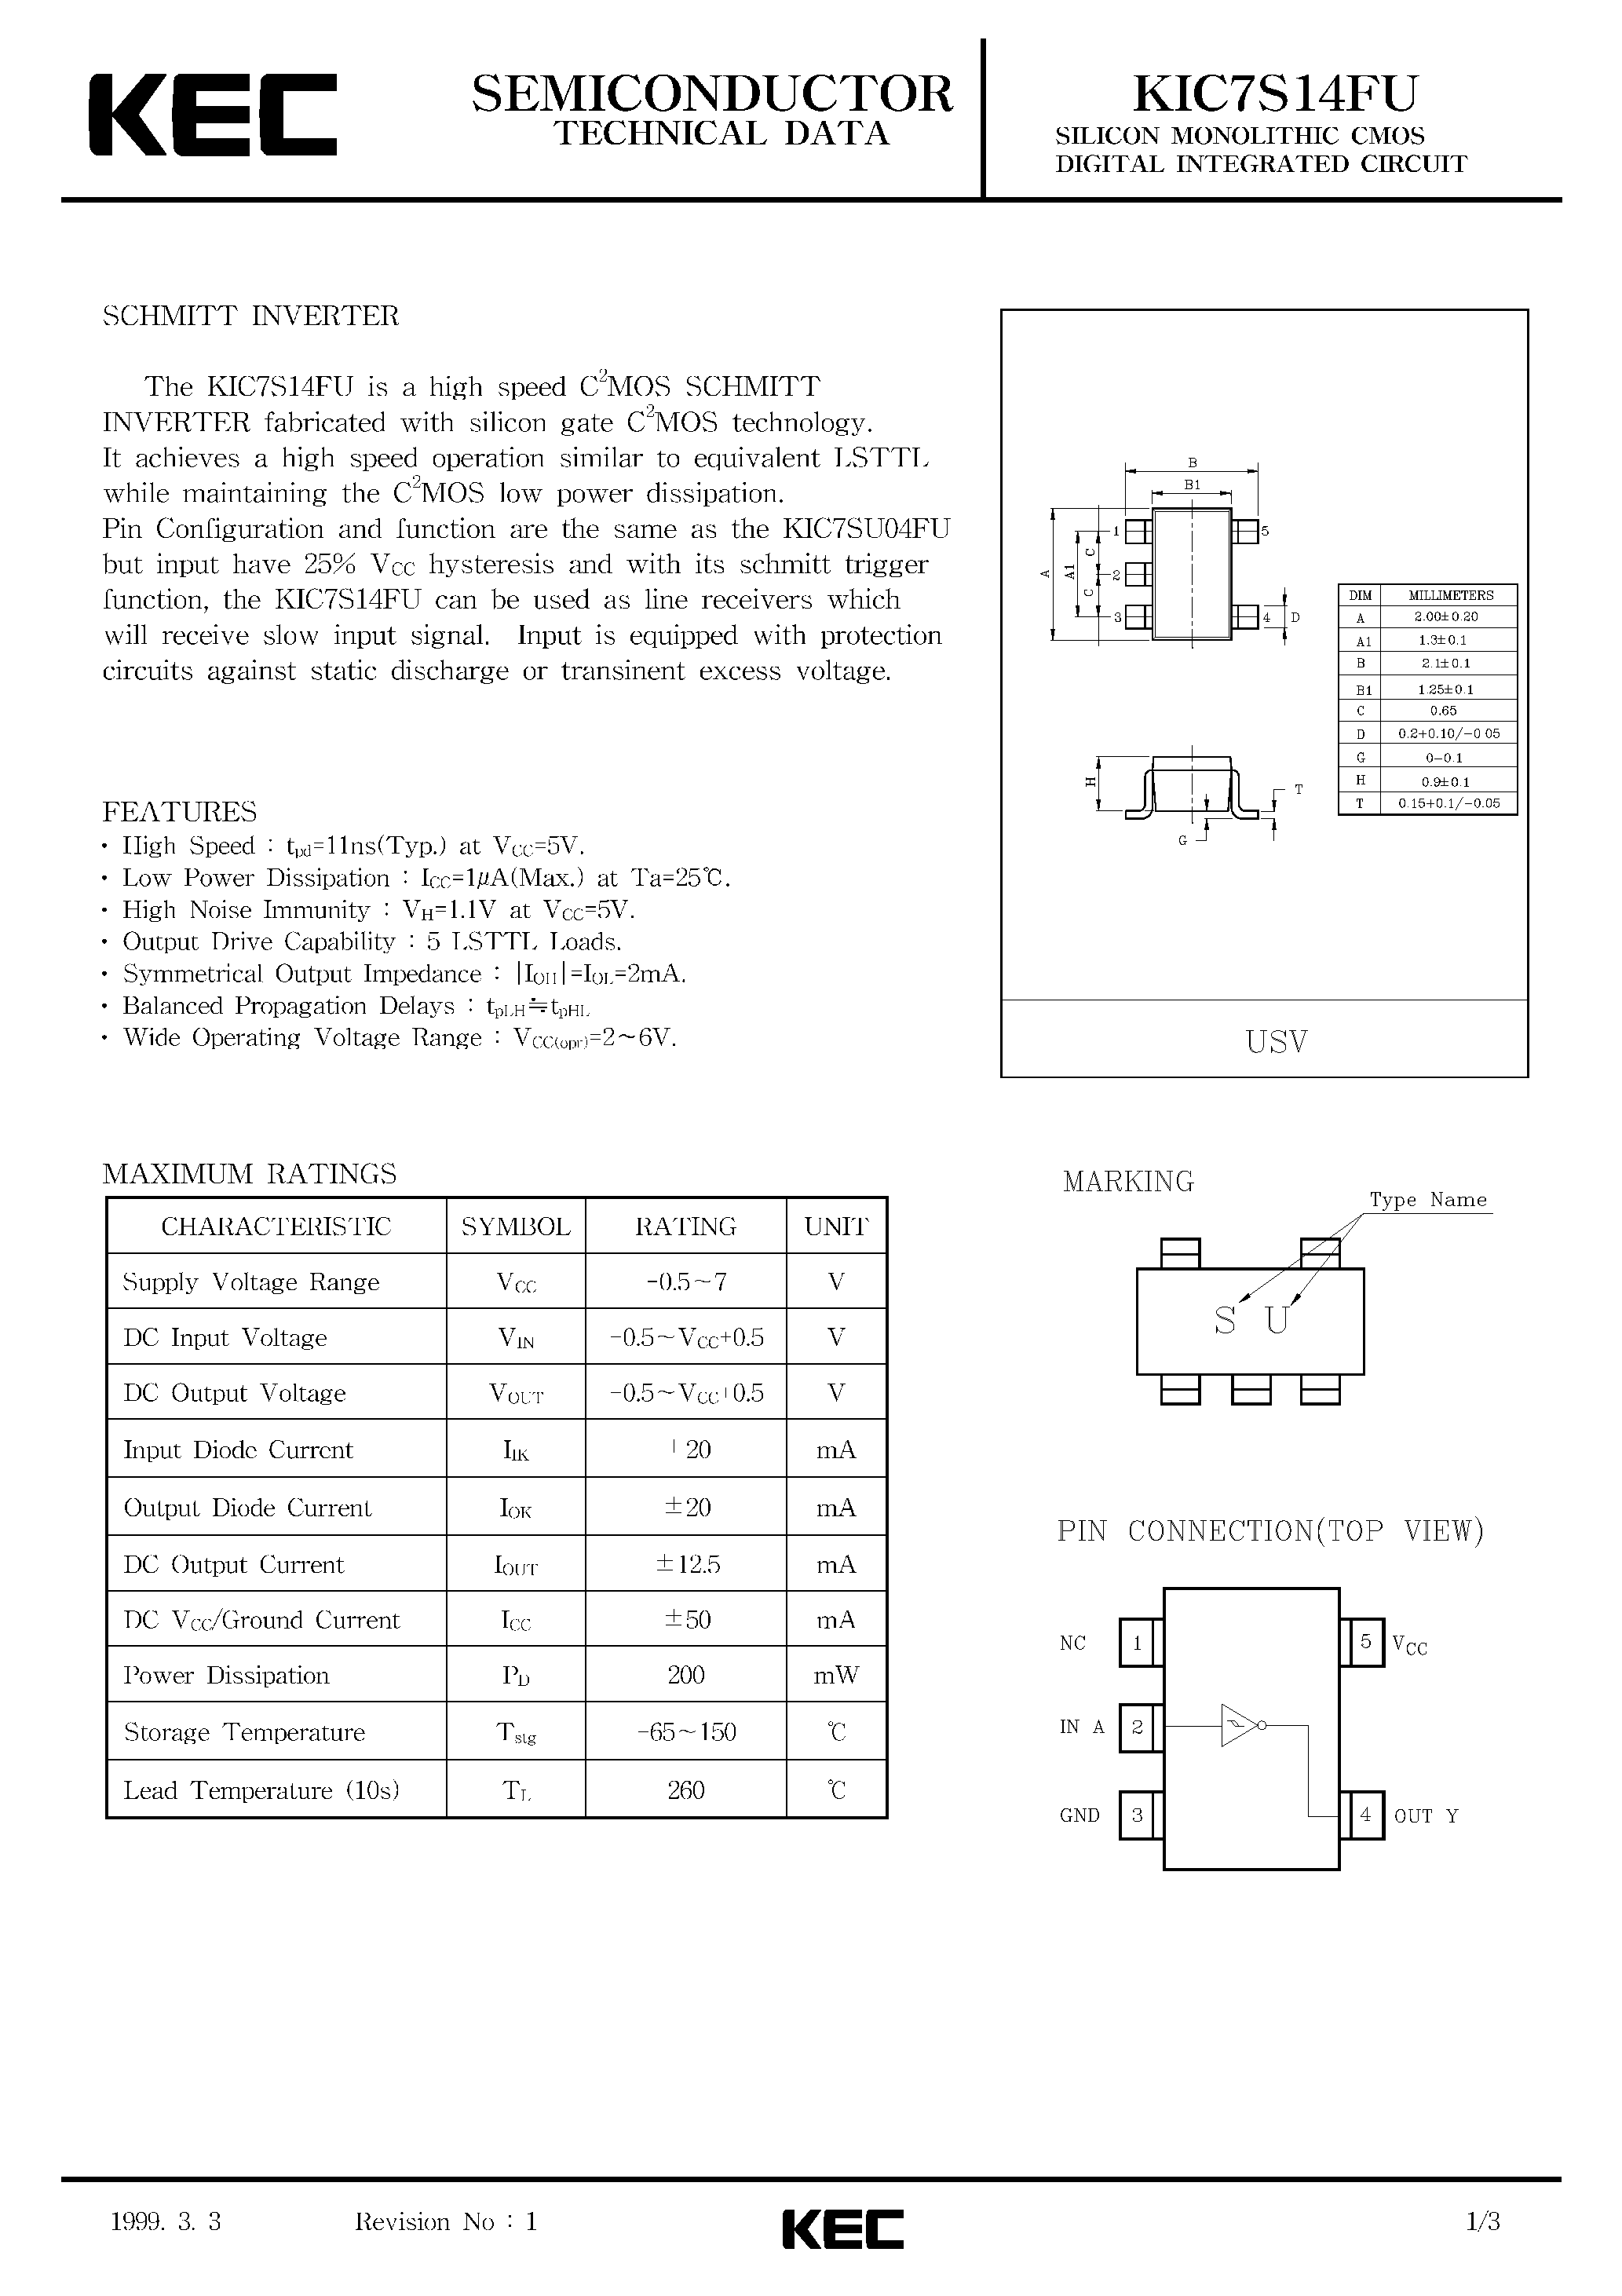 Даташит KIC7S14FU-SILICON MONOLITHIC CMOS DIGITAL INTEGRATED CIRCUIT (SCHMITT INVERTER) страница 1